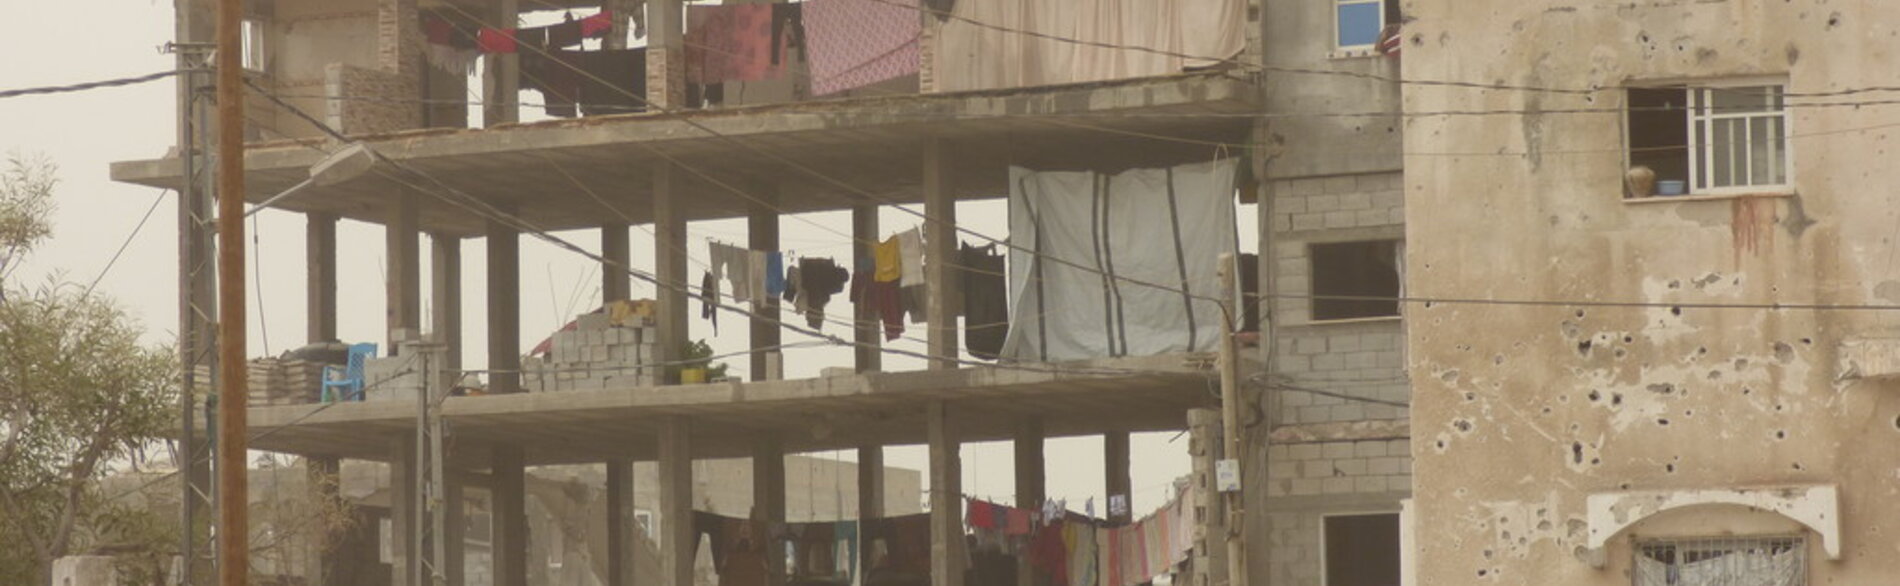 Building under construction housing IDPs; Beit Hanoun. Photo by OCHA, October 2015